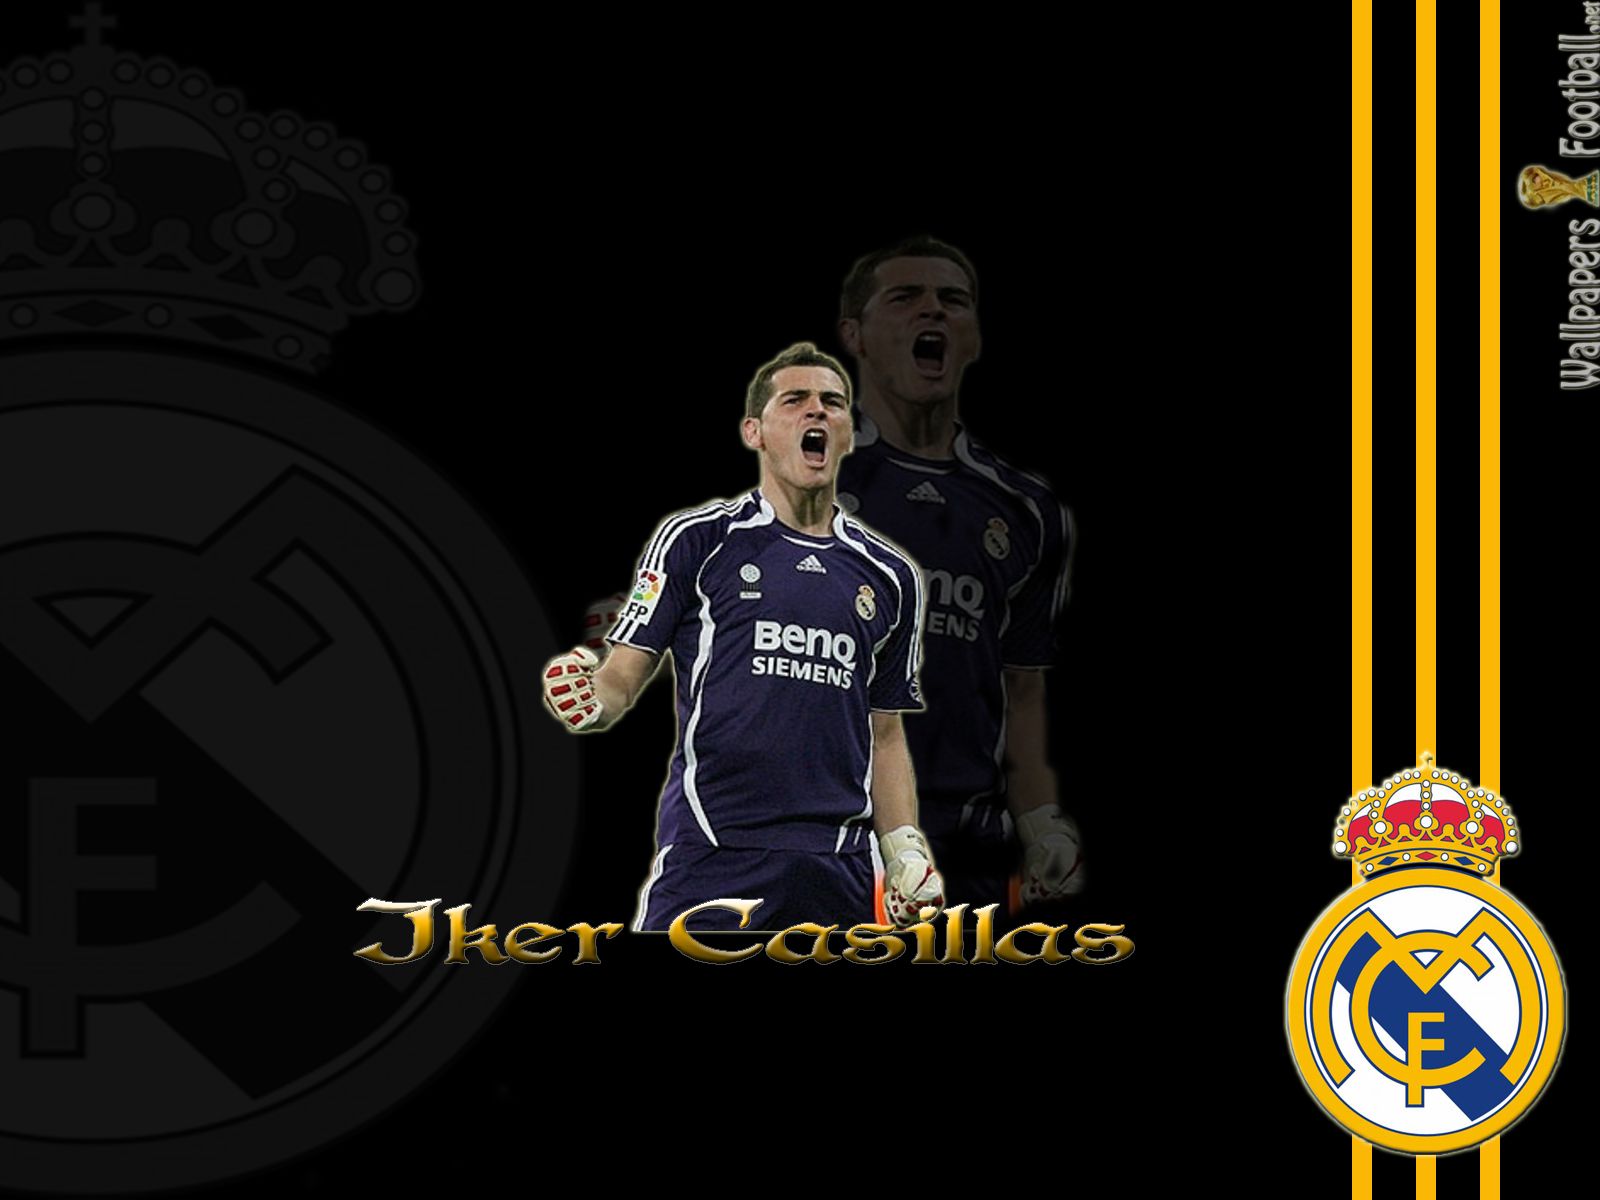 Free download Iker Casillas Football Wallpaper [1600x1200]